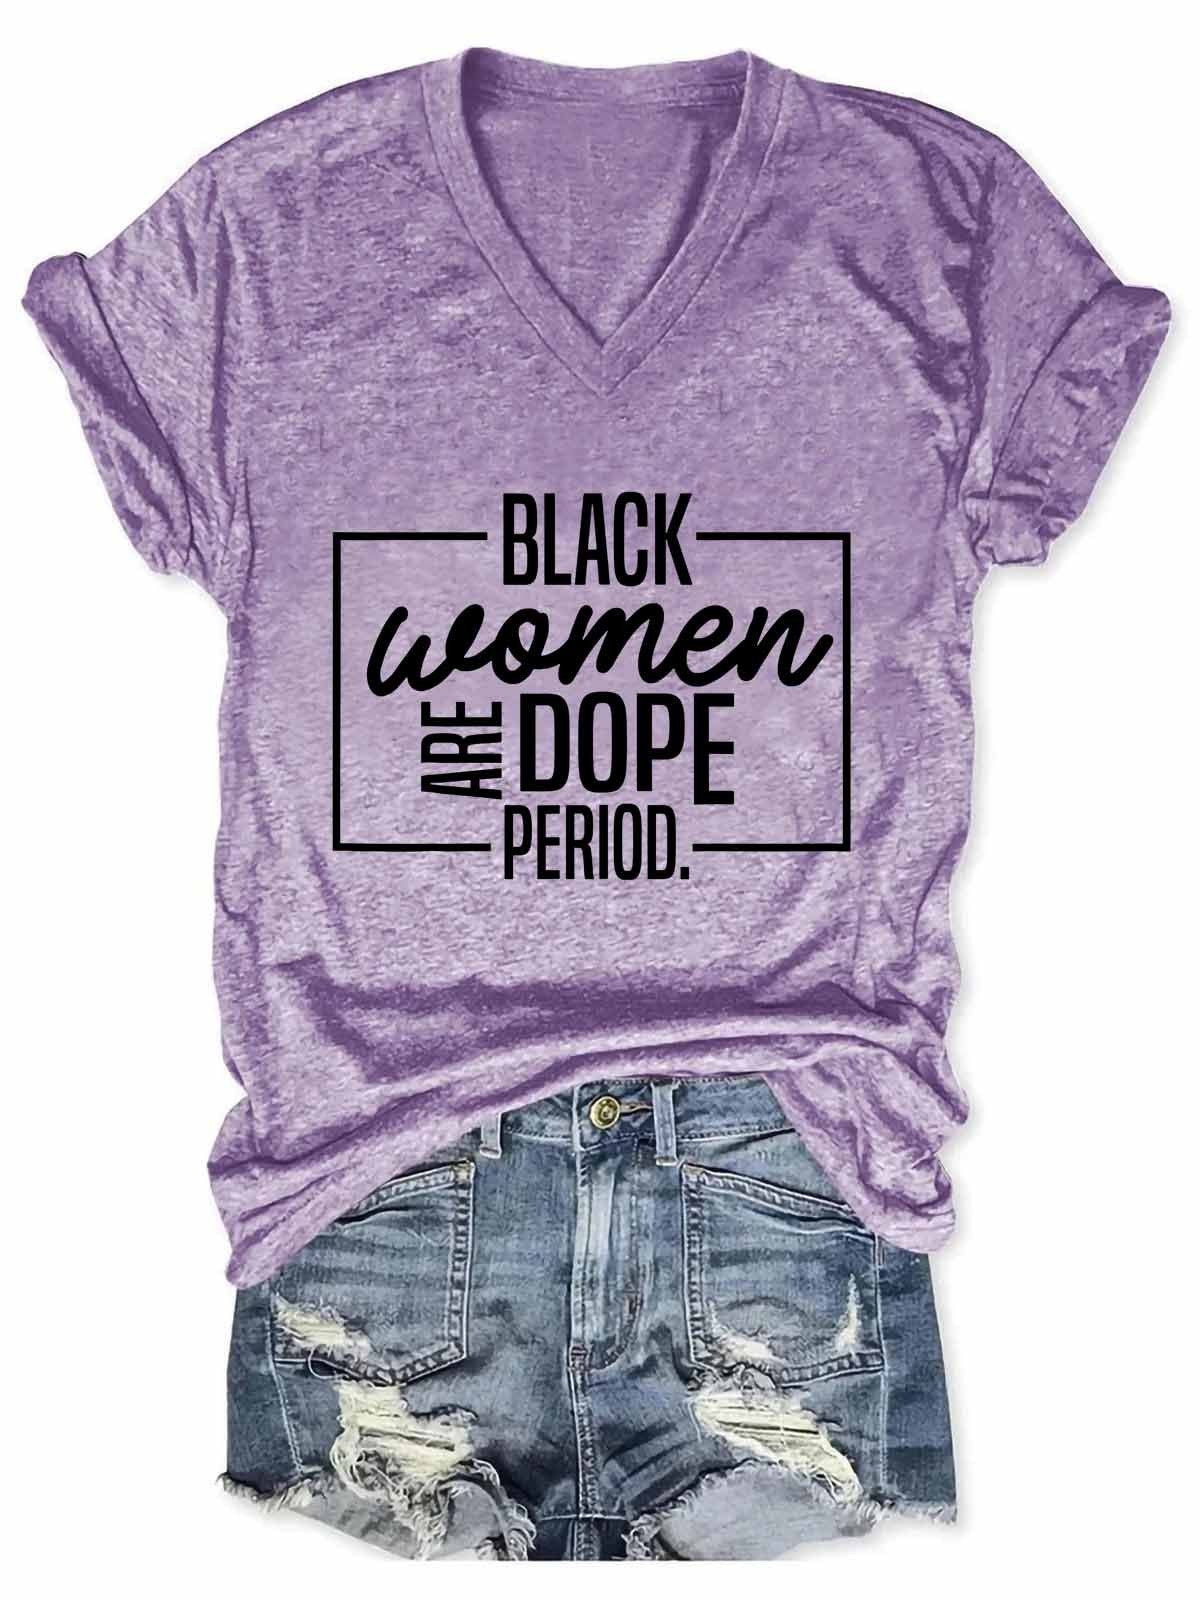 Women's Race Black History Month Black Women Are Dope Pride V-Neck T-Shirt - Outlets Forever